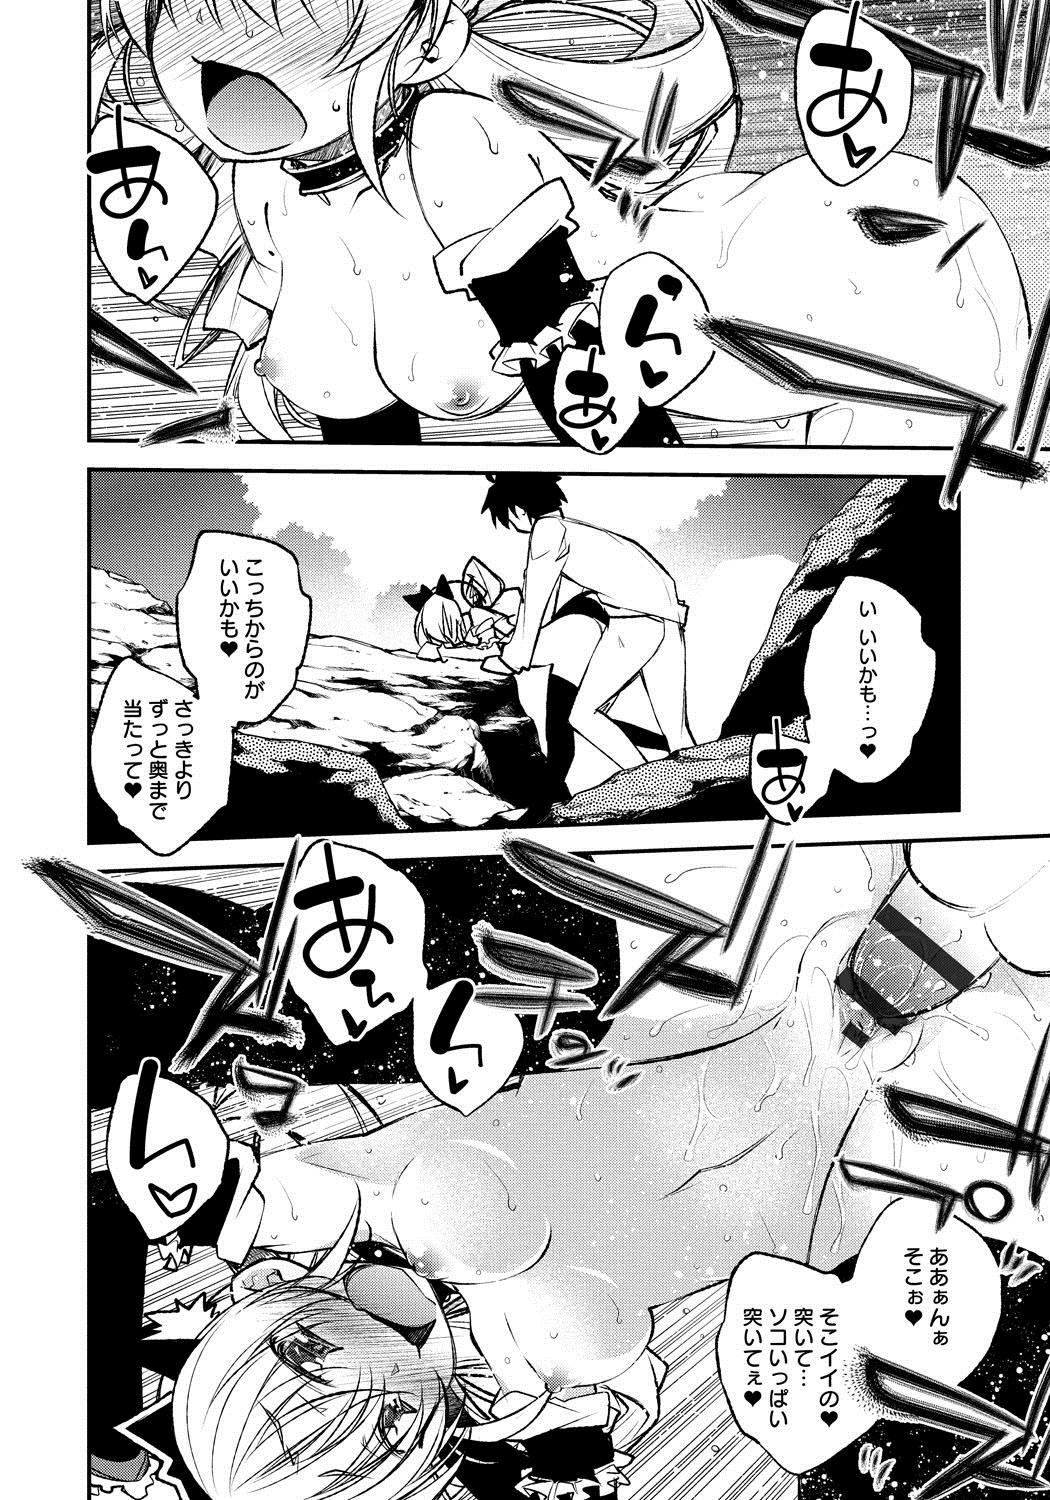 [Anthology] Lord of Walkure Adult Comic Anthology 2 - R-18 Ban de Maiban Ottanoshimi~! ...na Kishi-sama no Koto desu kara Sazoya 20